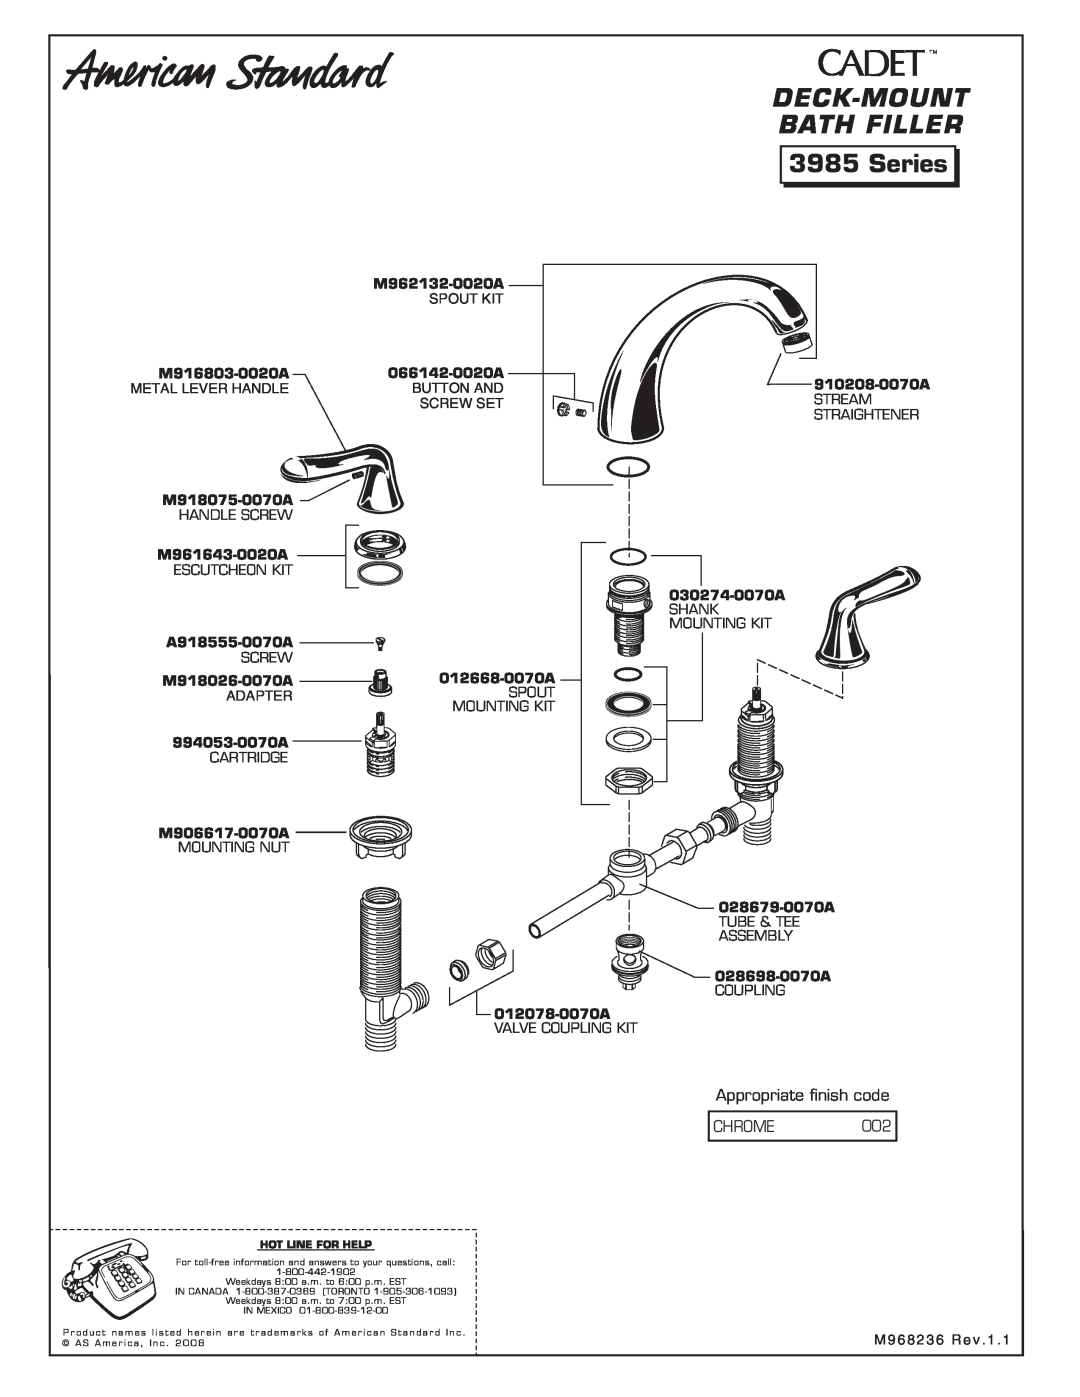 American Standard 3985 installation instructions Deck-Mount Bath Filler, Installation Instructions, Series 